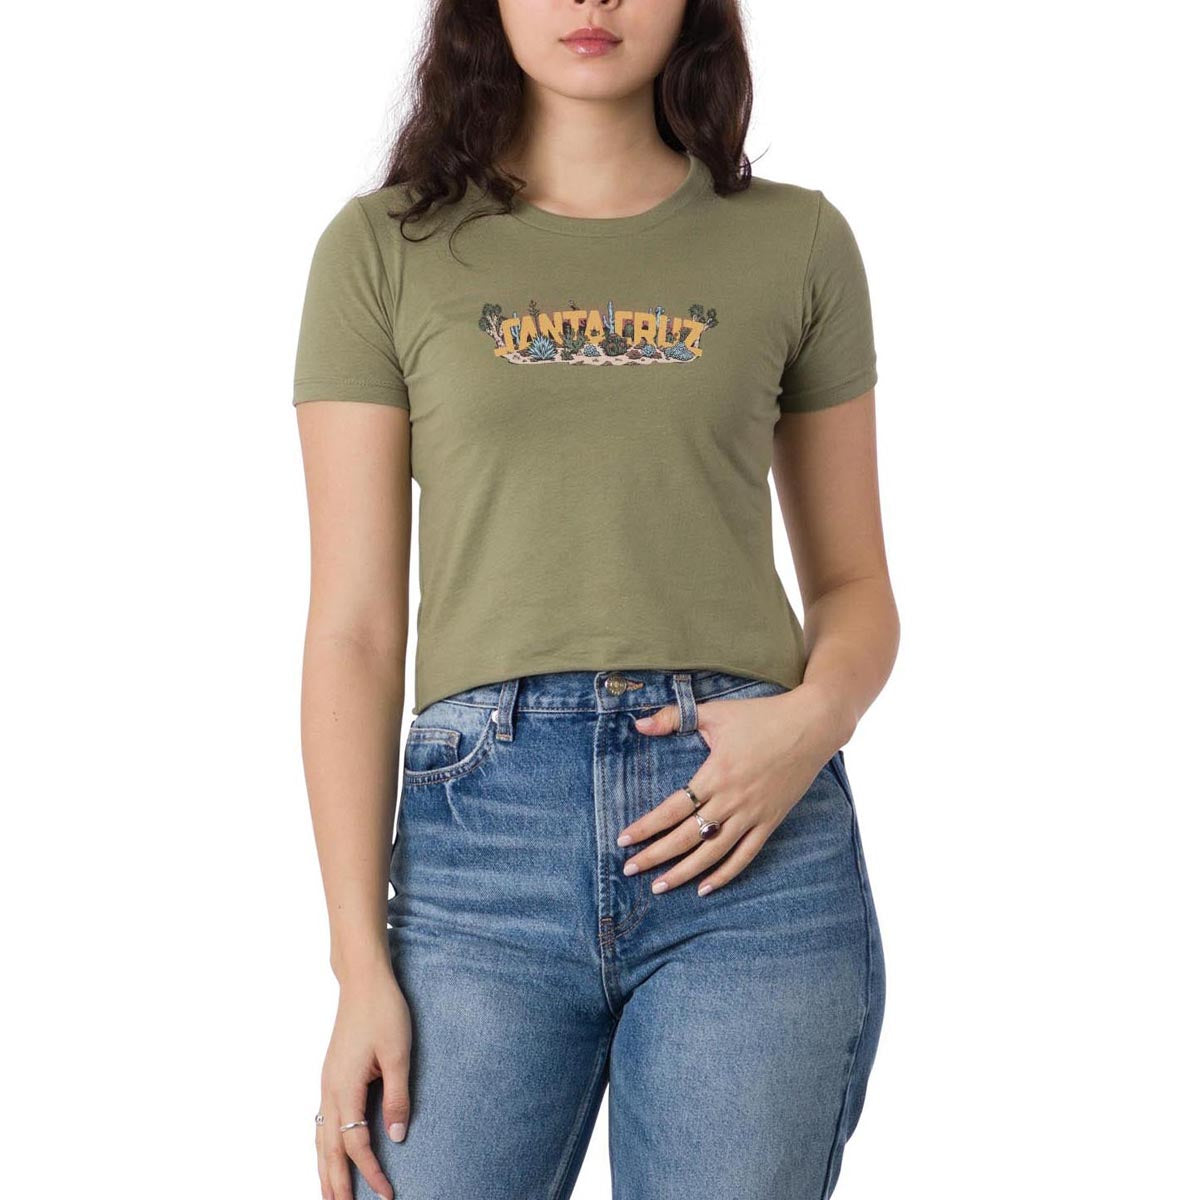 Santa Cruz Womens Desert Strip Crop Fitted T-Shirt - Light Olive image 1